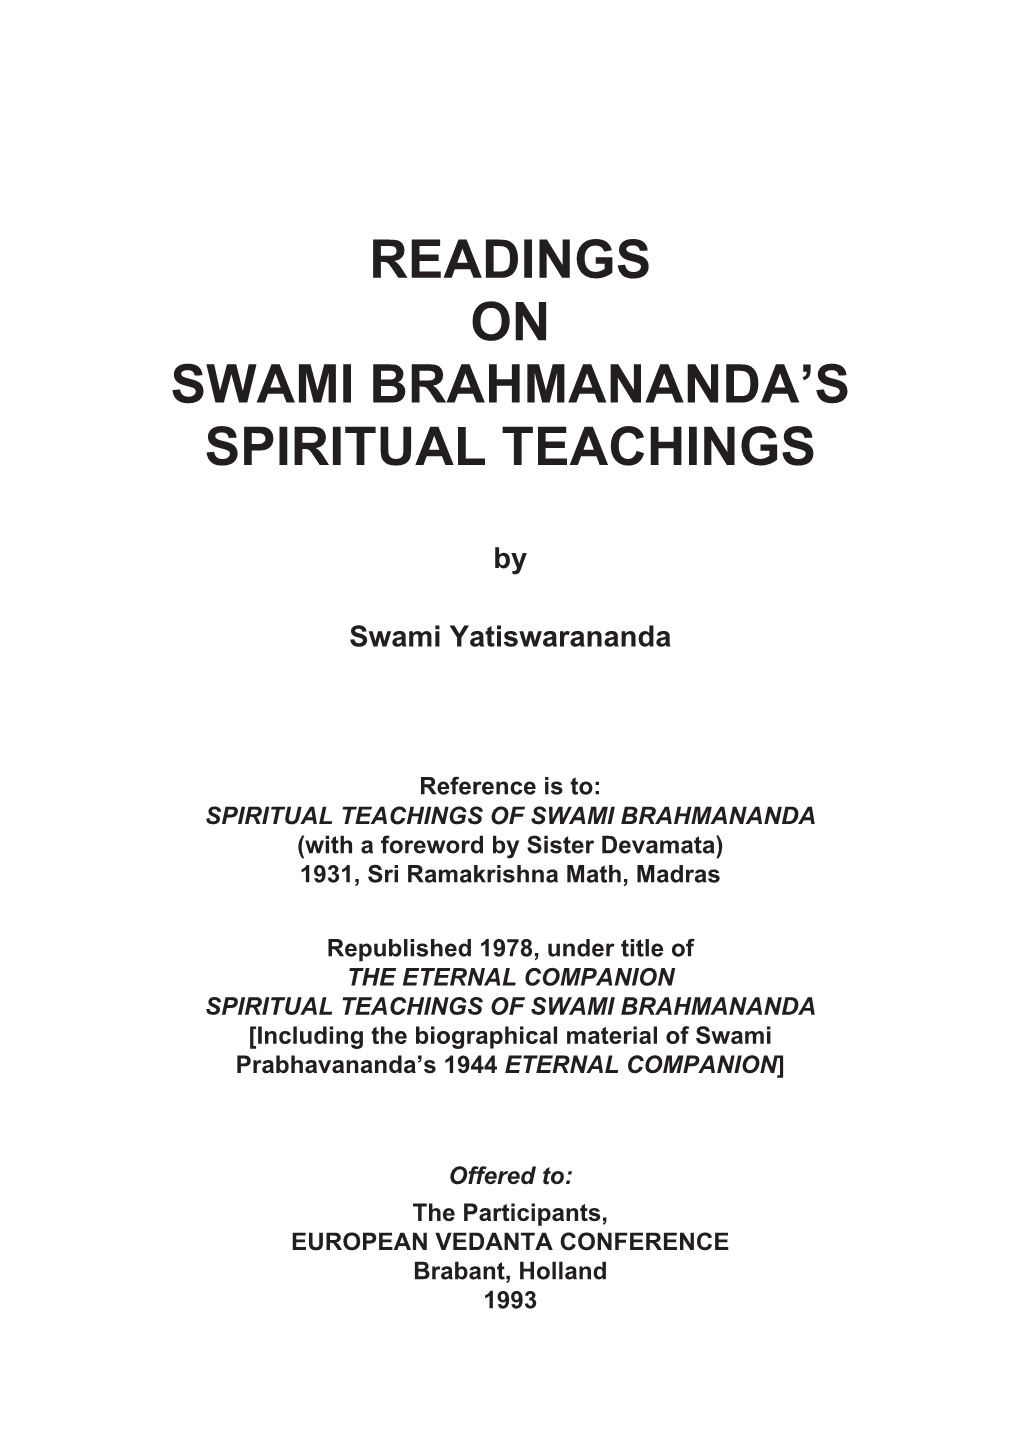 Readings on the Spiritual Teachings of Swami Brahmananda